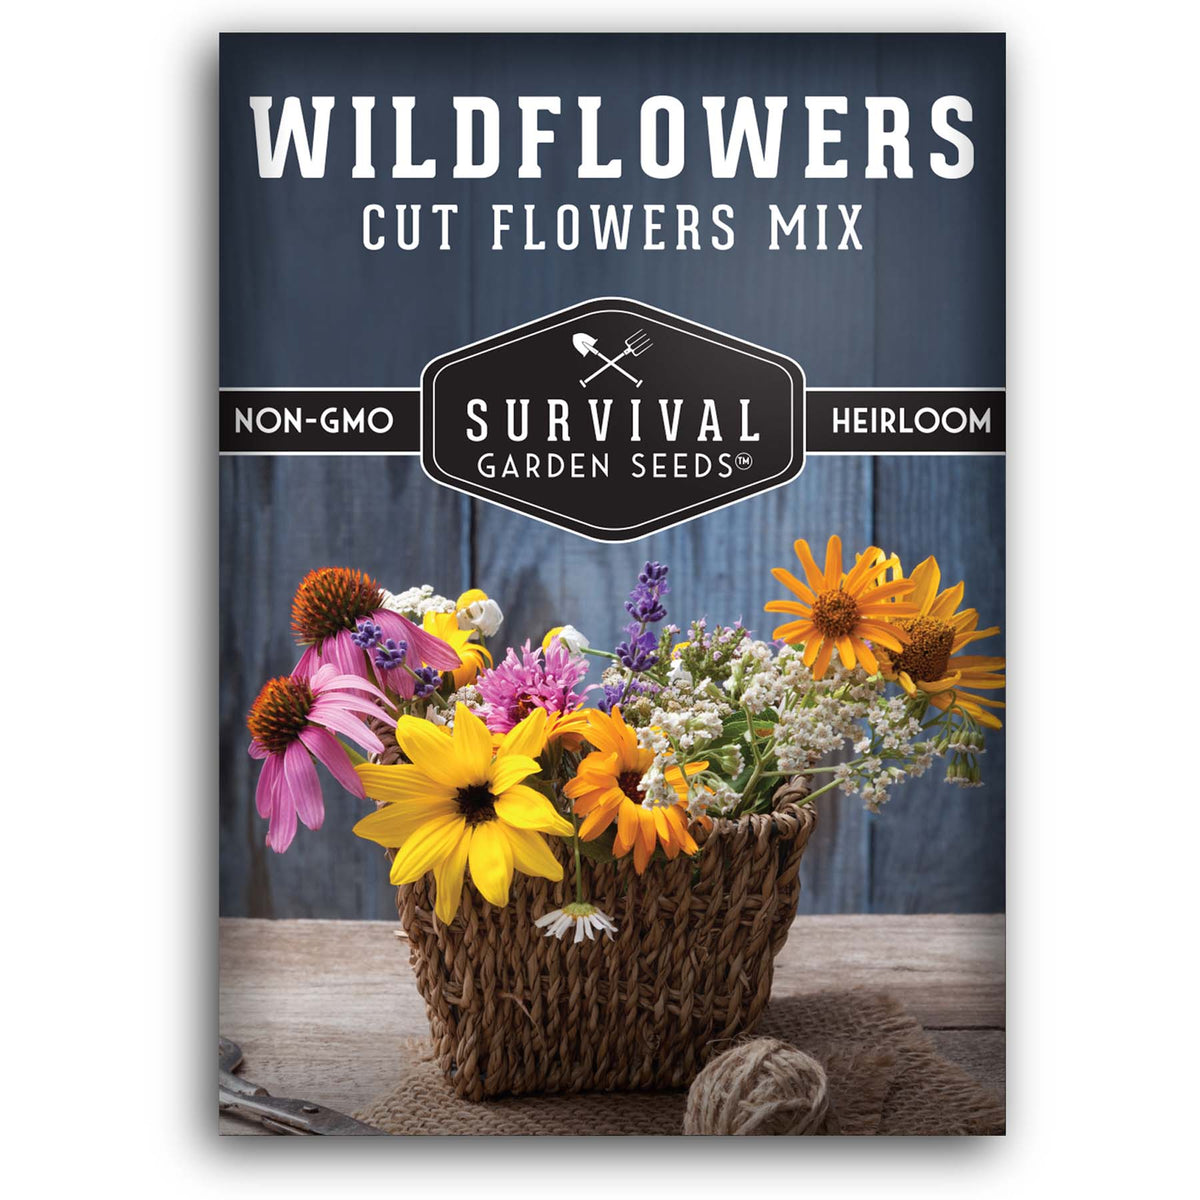 Wildflowers cut flower seed mix